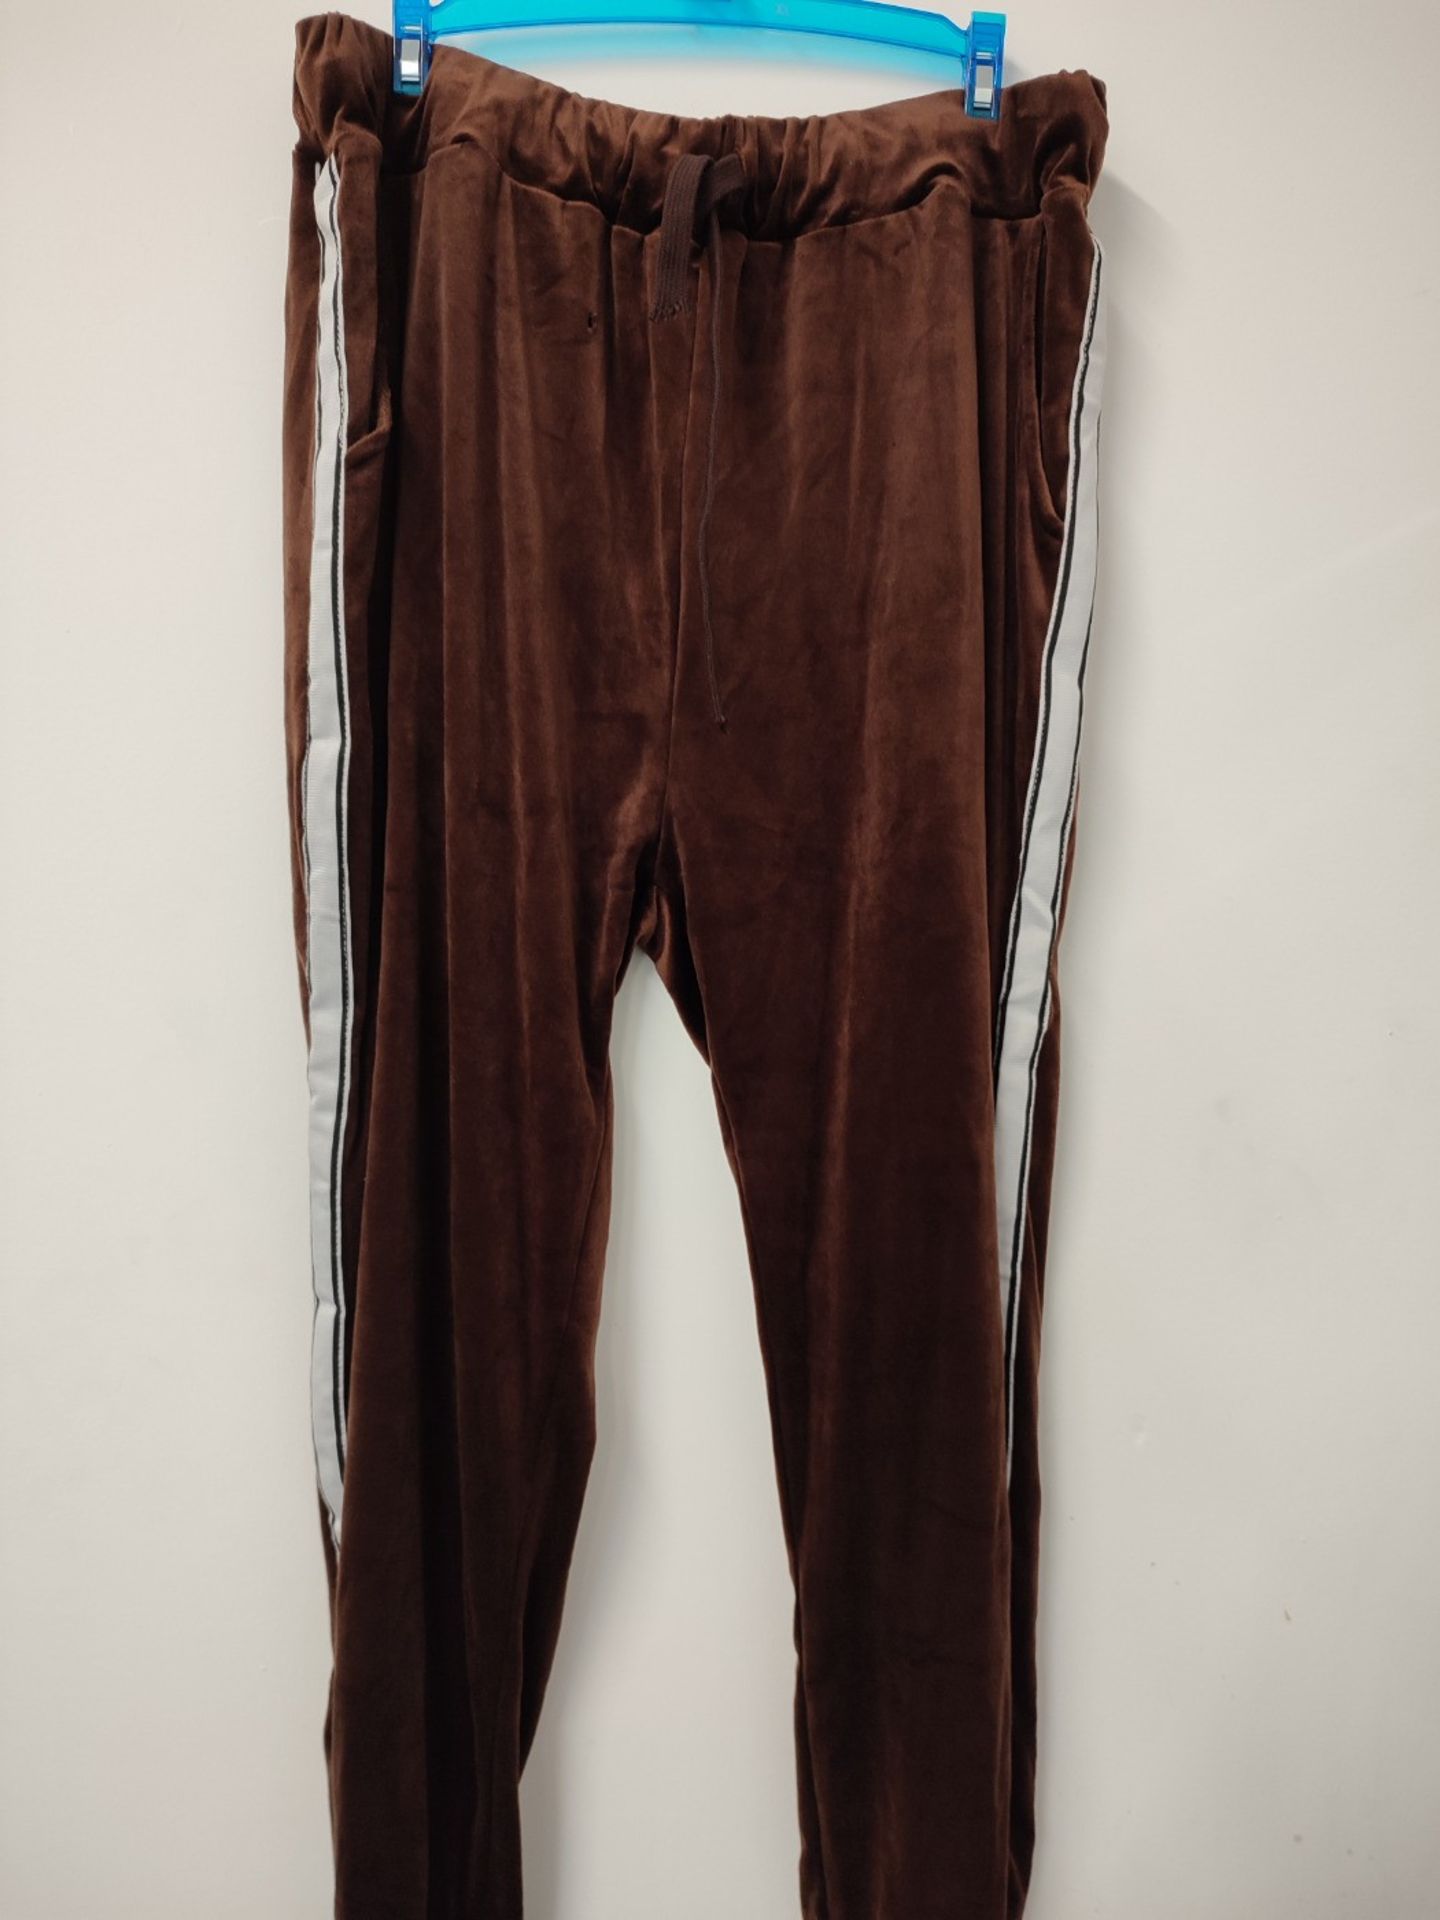 Gyabnw Women's jogging suit, leisure suit, casual tracksuit, velour sports suit, strip - Image 3 of 3